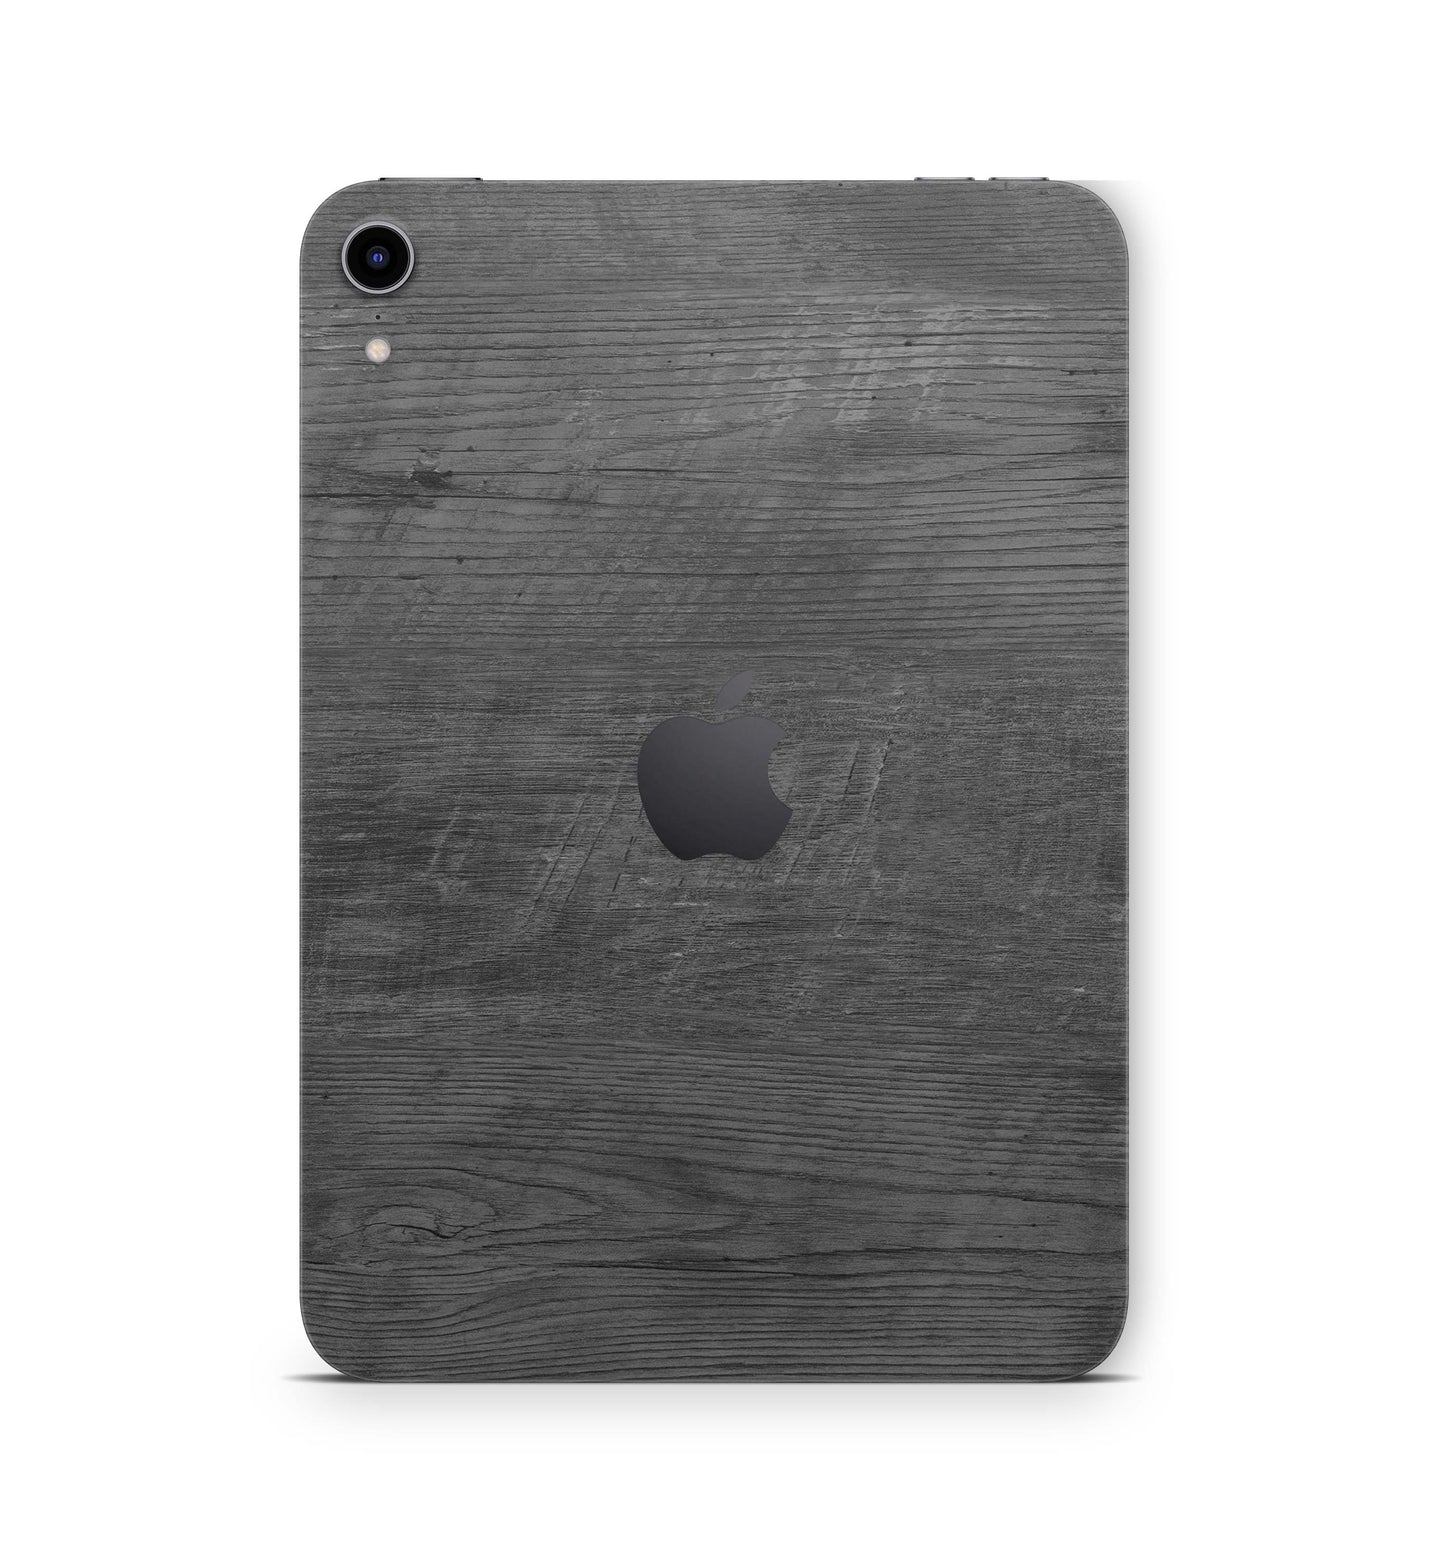 iPad Air Skin Design Cover Folie Vinyl Skins & Wraps für alle iPad Air Modelle Aufkleber Skins4u Black-Woodgrain  